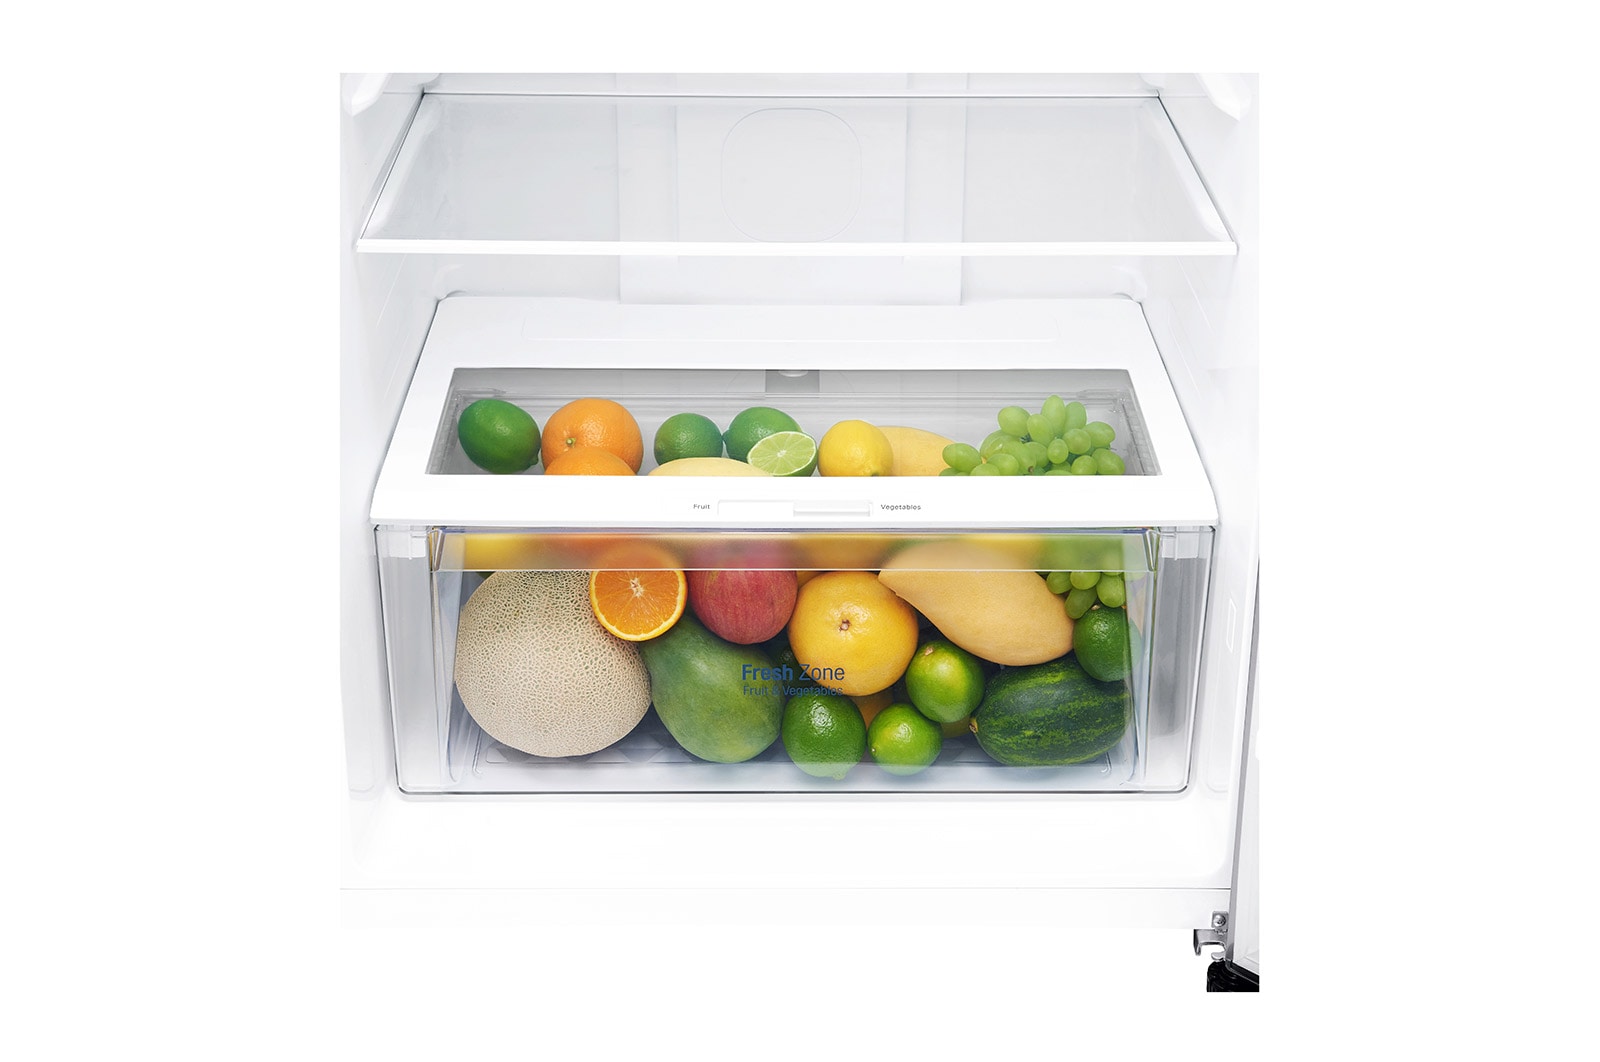 LG Top freezer Refrigerator 427L Gross Capacity, Dark Graphite Steel Color, Inverter Compressor, GNB-532D